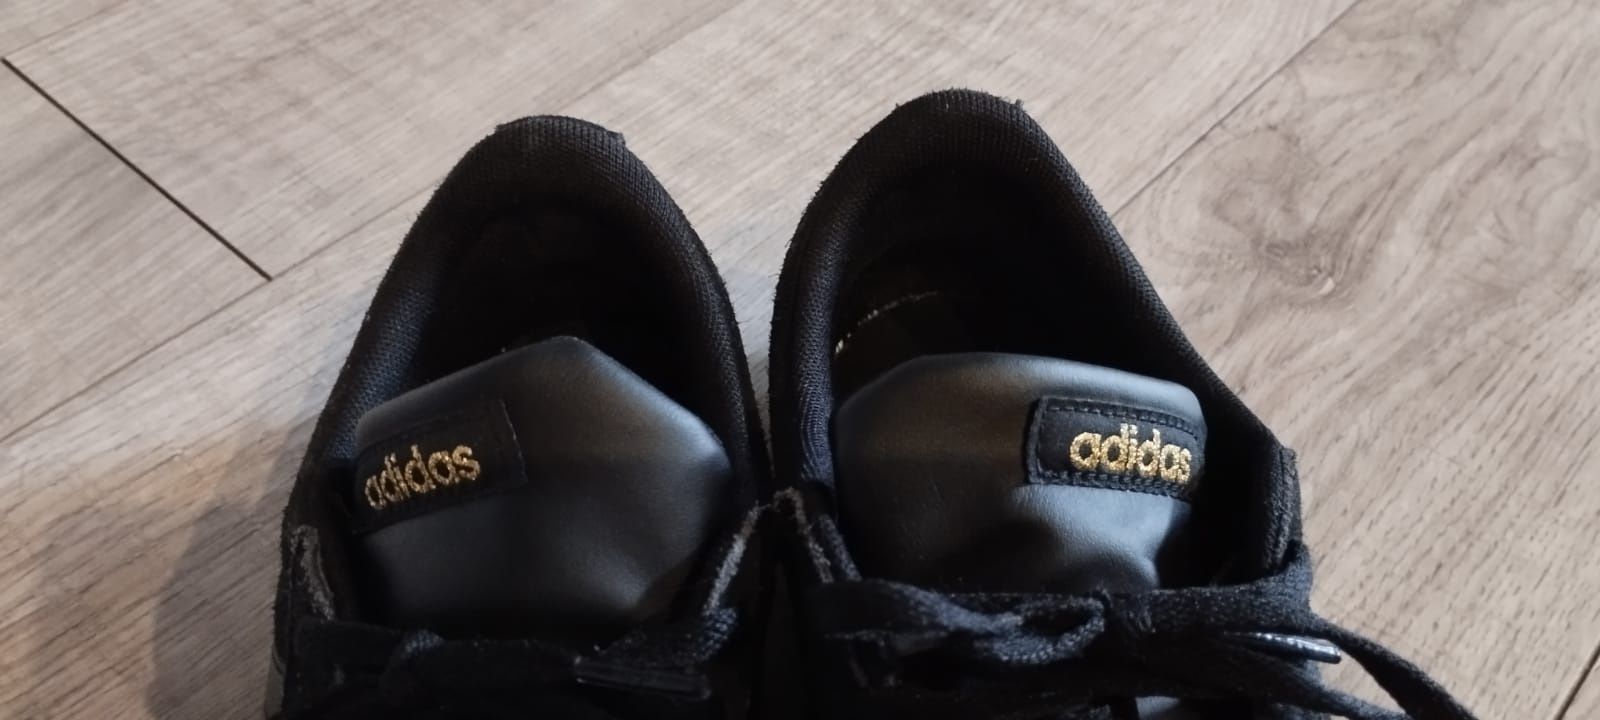 Trampki adidas czarne